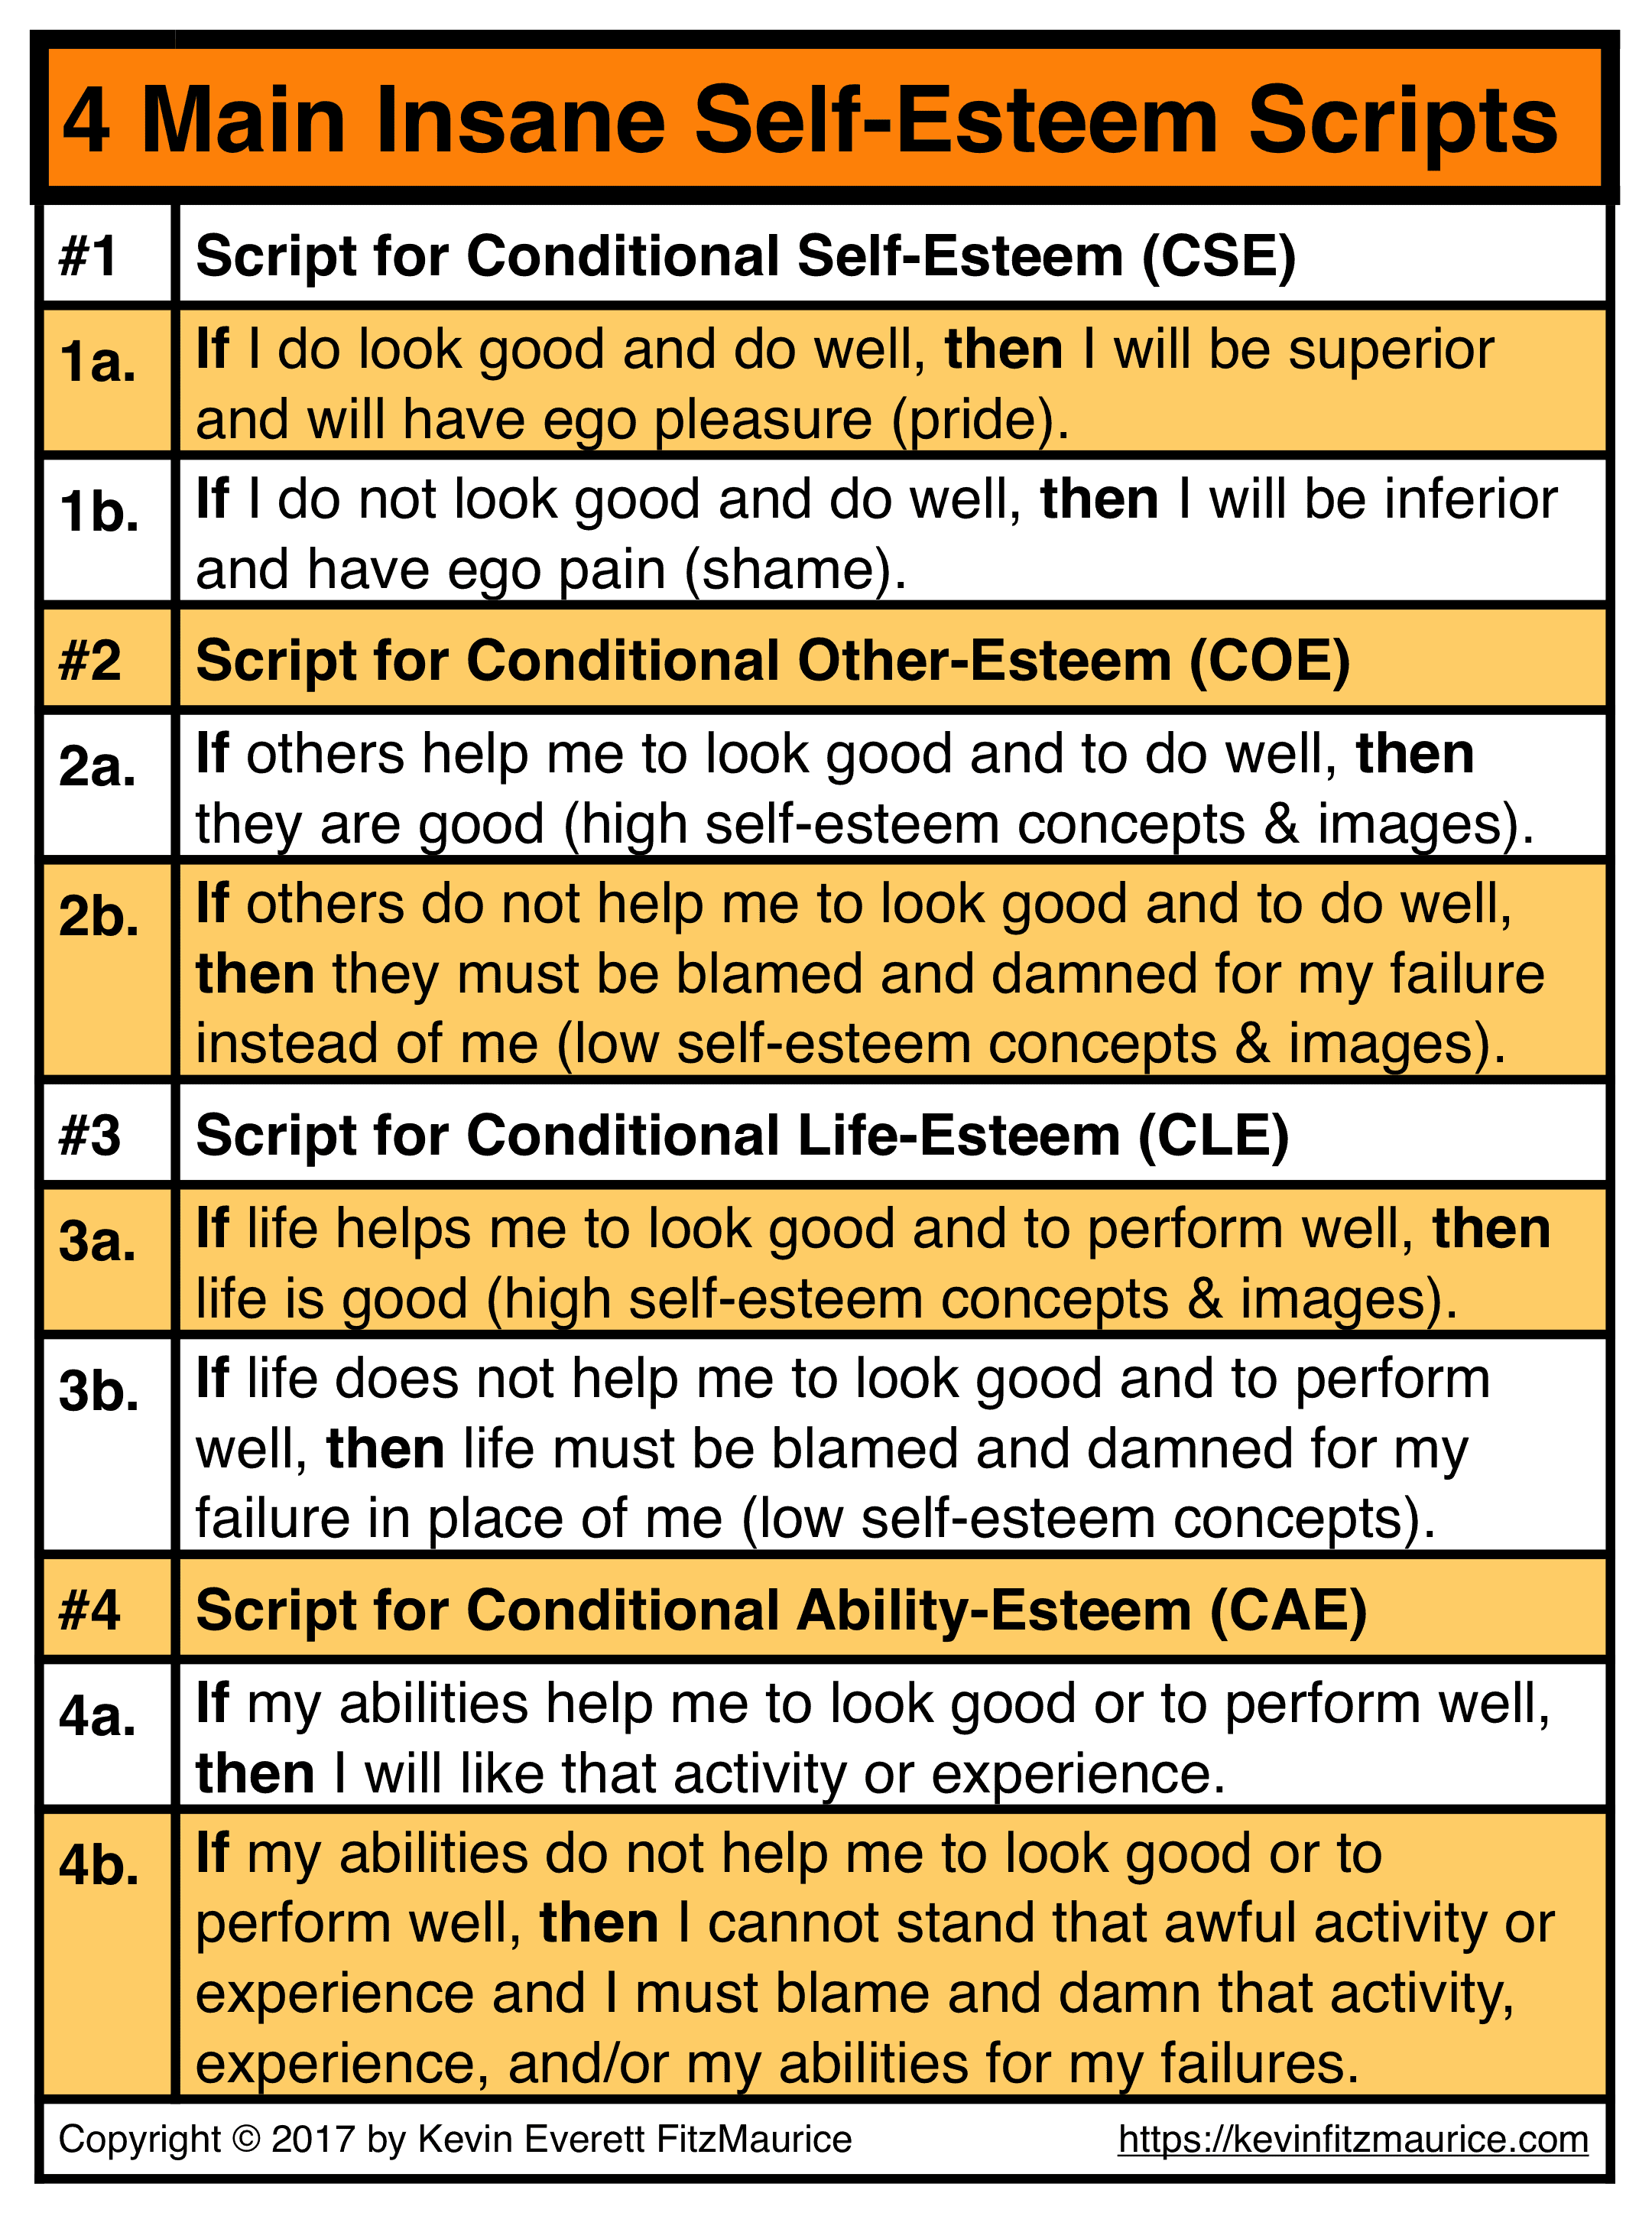 4 Main Insane Self-Esteem Scripts